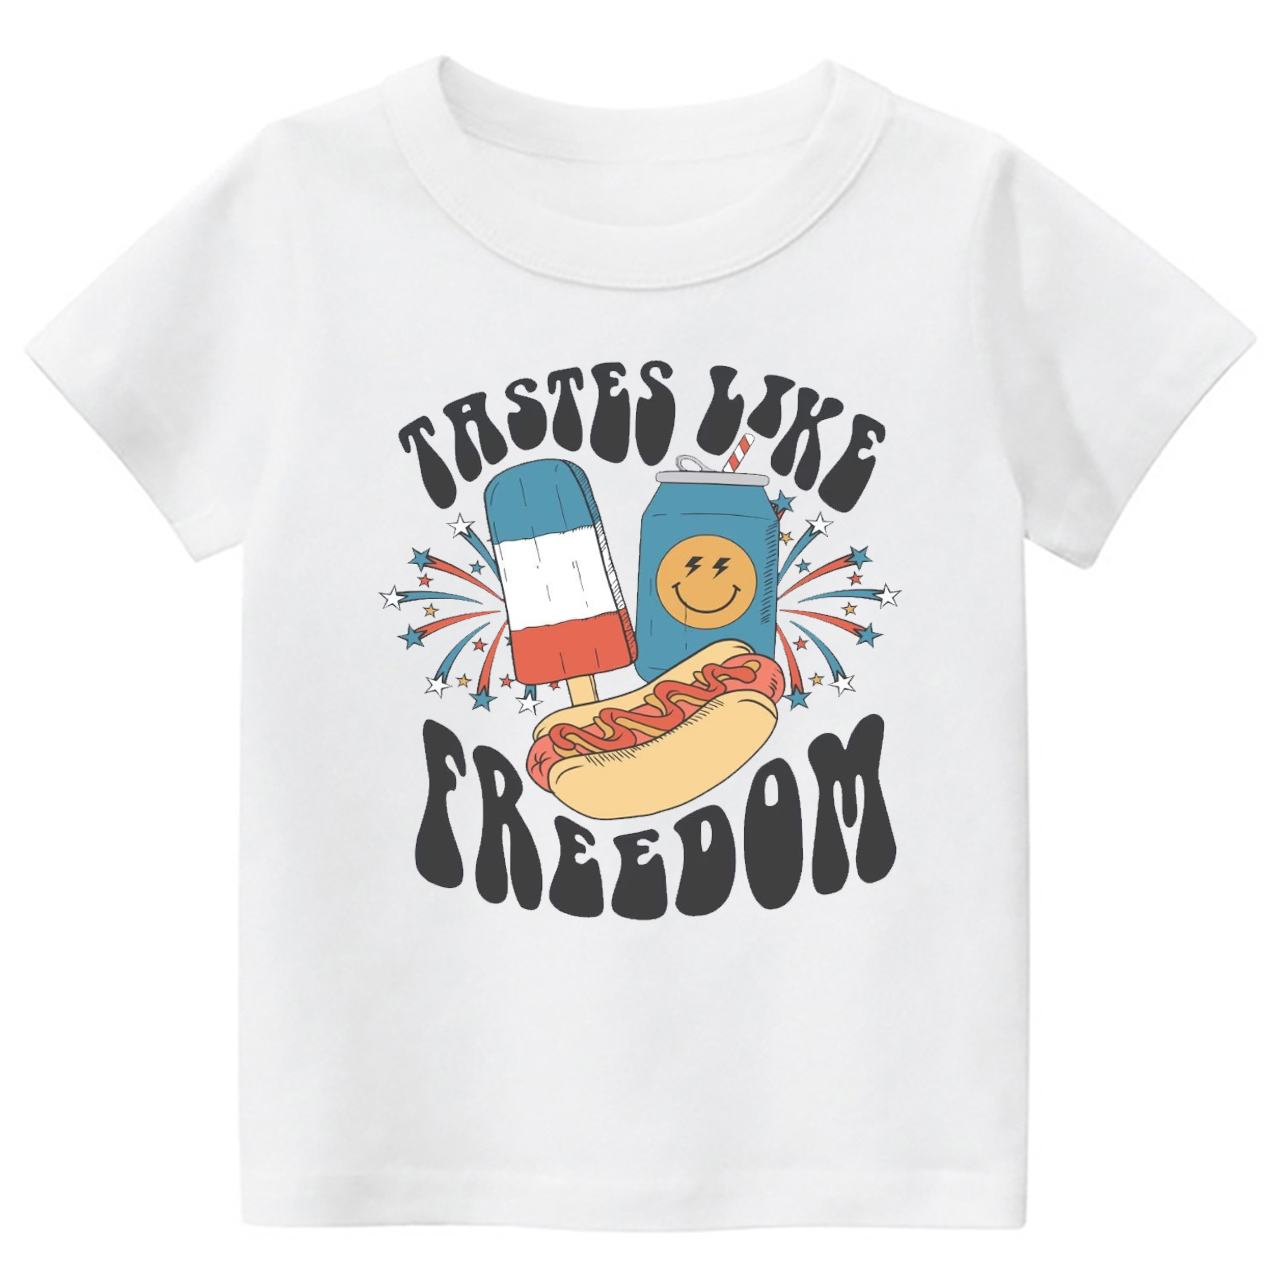 Tastes Like Freedom Toddler Shirt